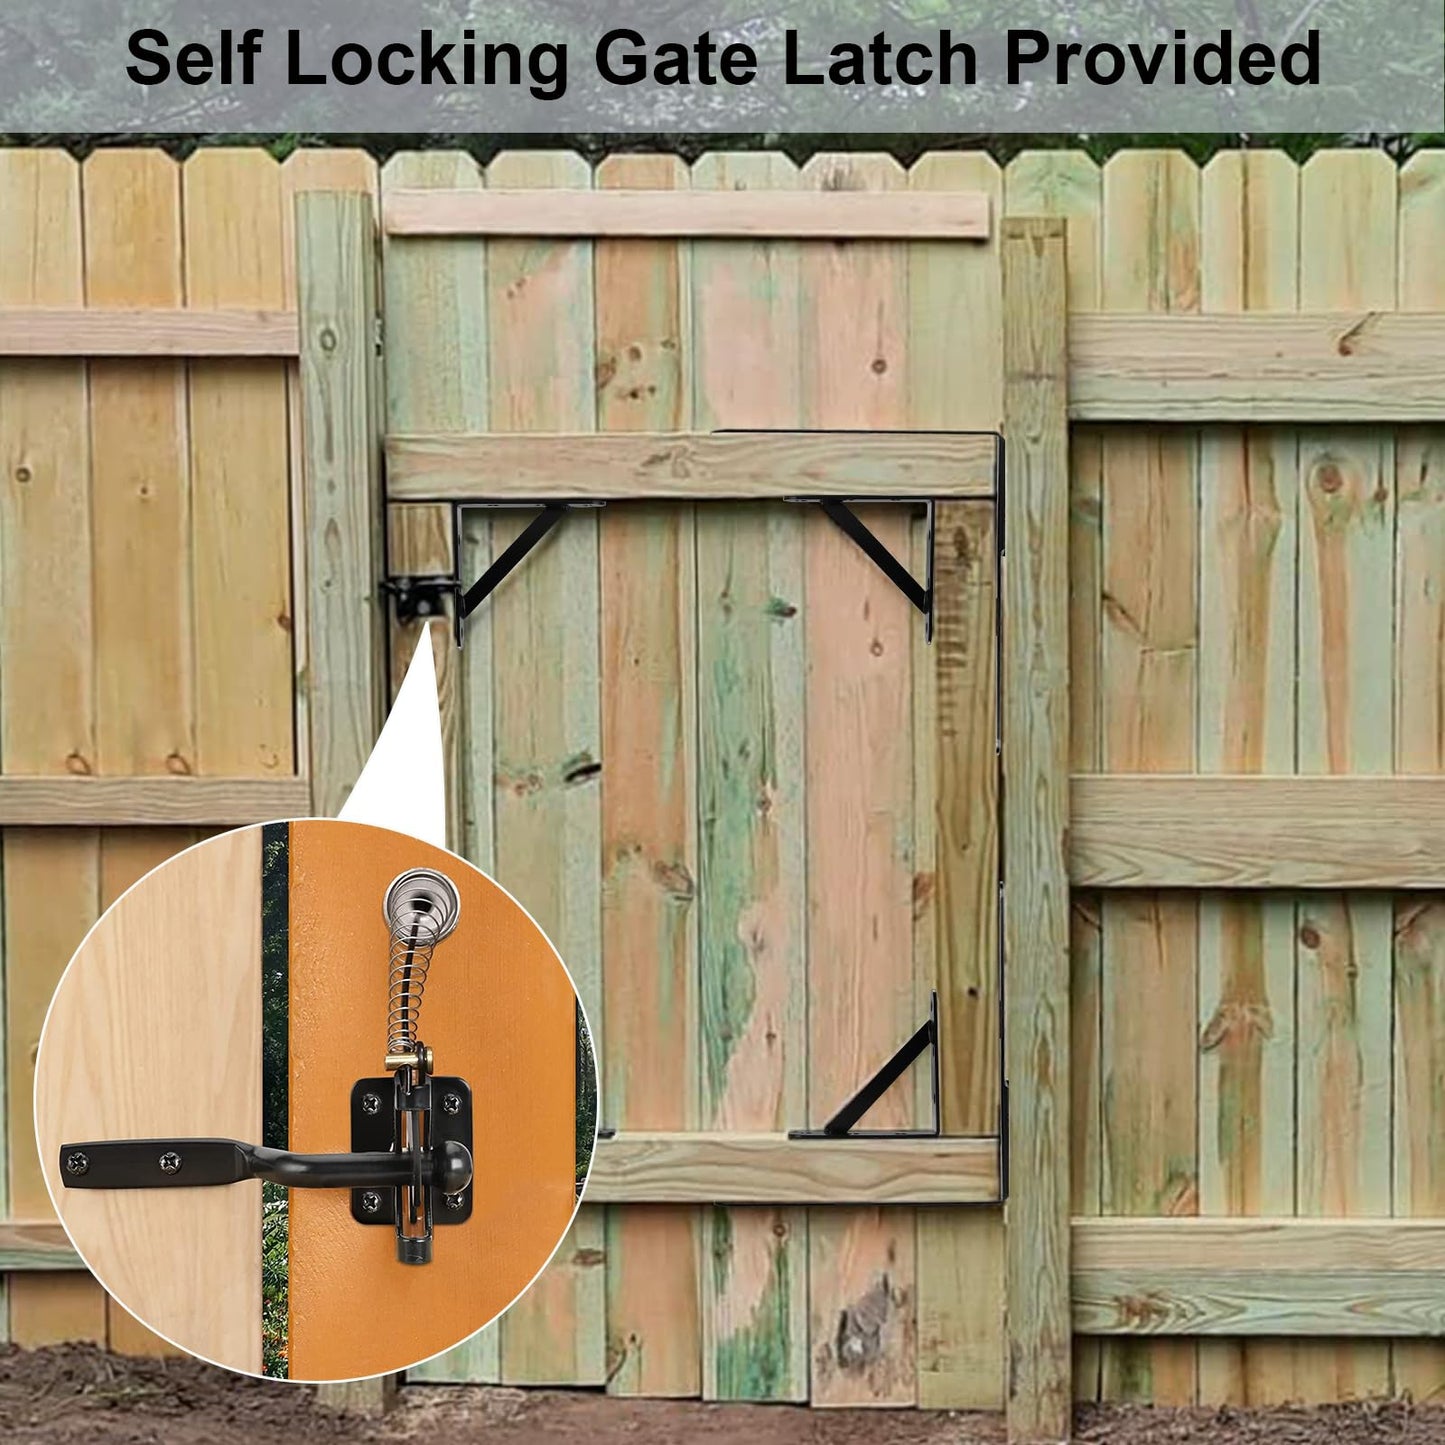 Mofeez Fence Gate Kit Iron Gate Hardware with Gate Latch for Wooden Fences, Shed Doors, Heavy Duty Anti Sag Gate Corner Brace Bracket